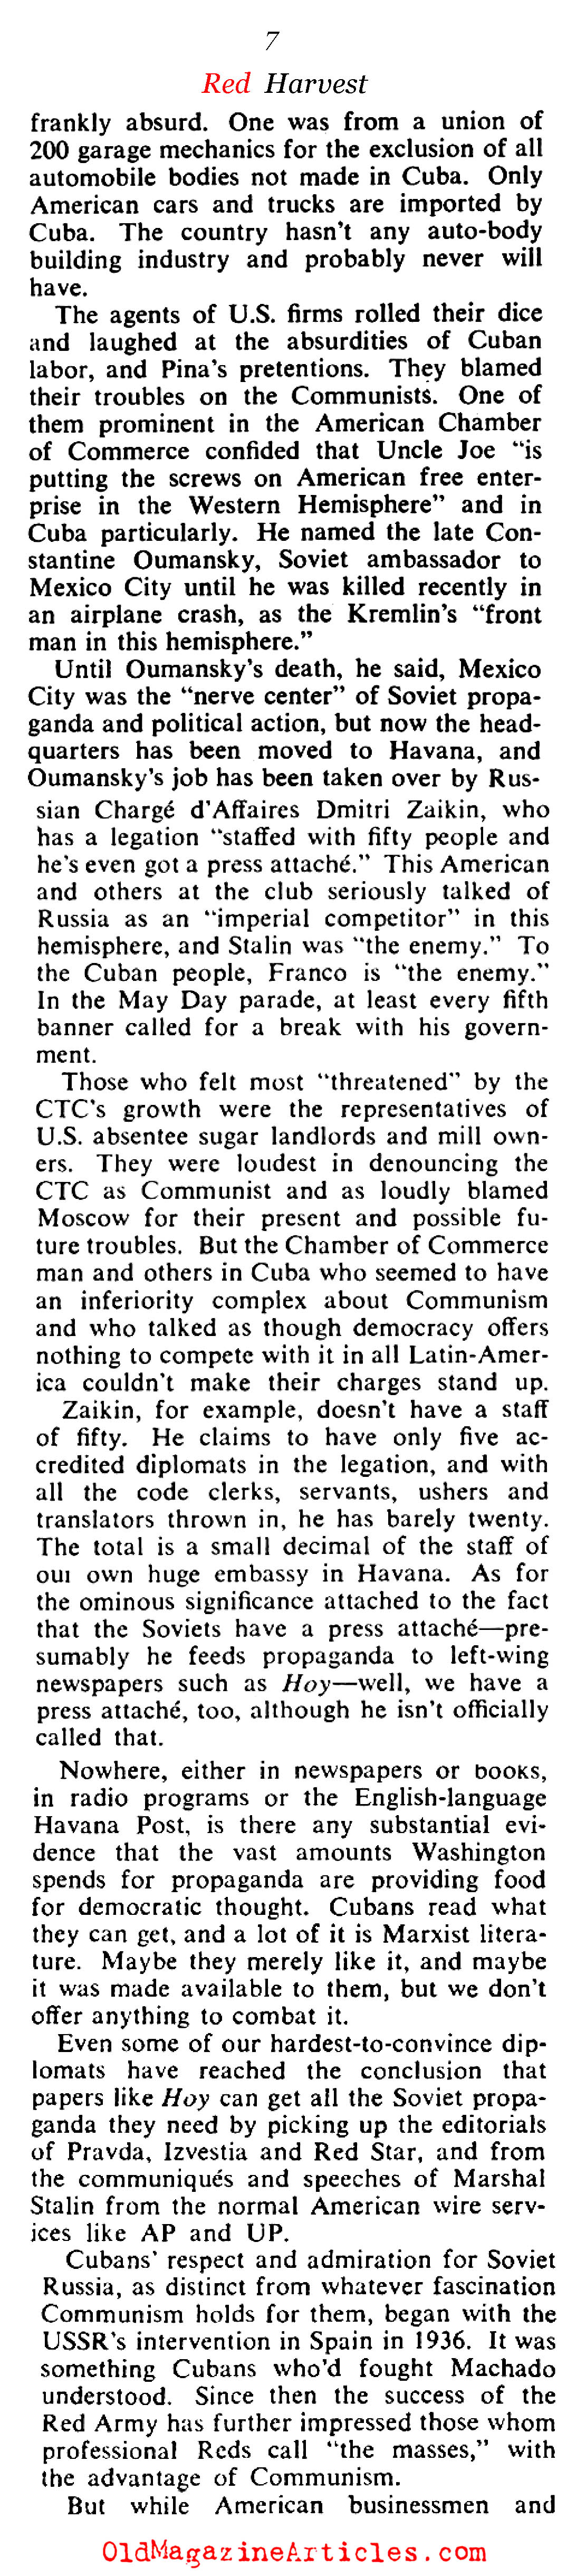 Big Trouble in Little Cuba (Collier's Magazine, 1945)